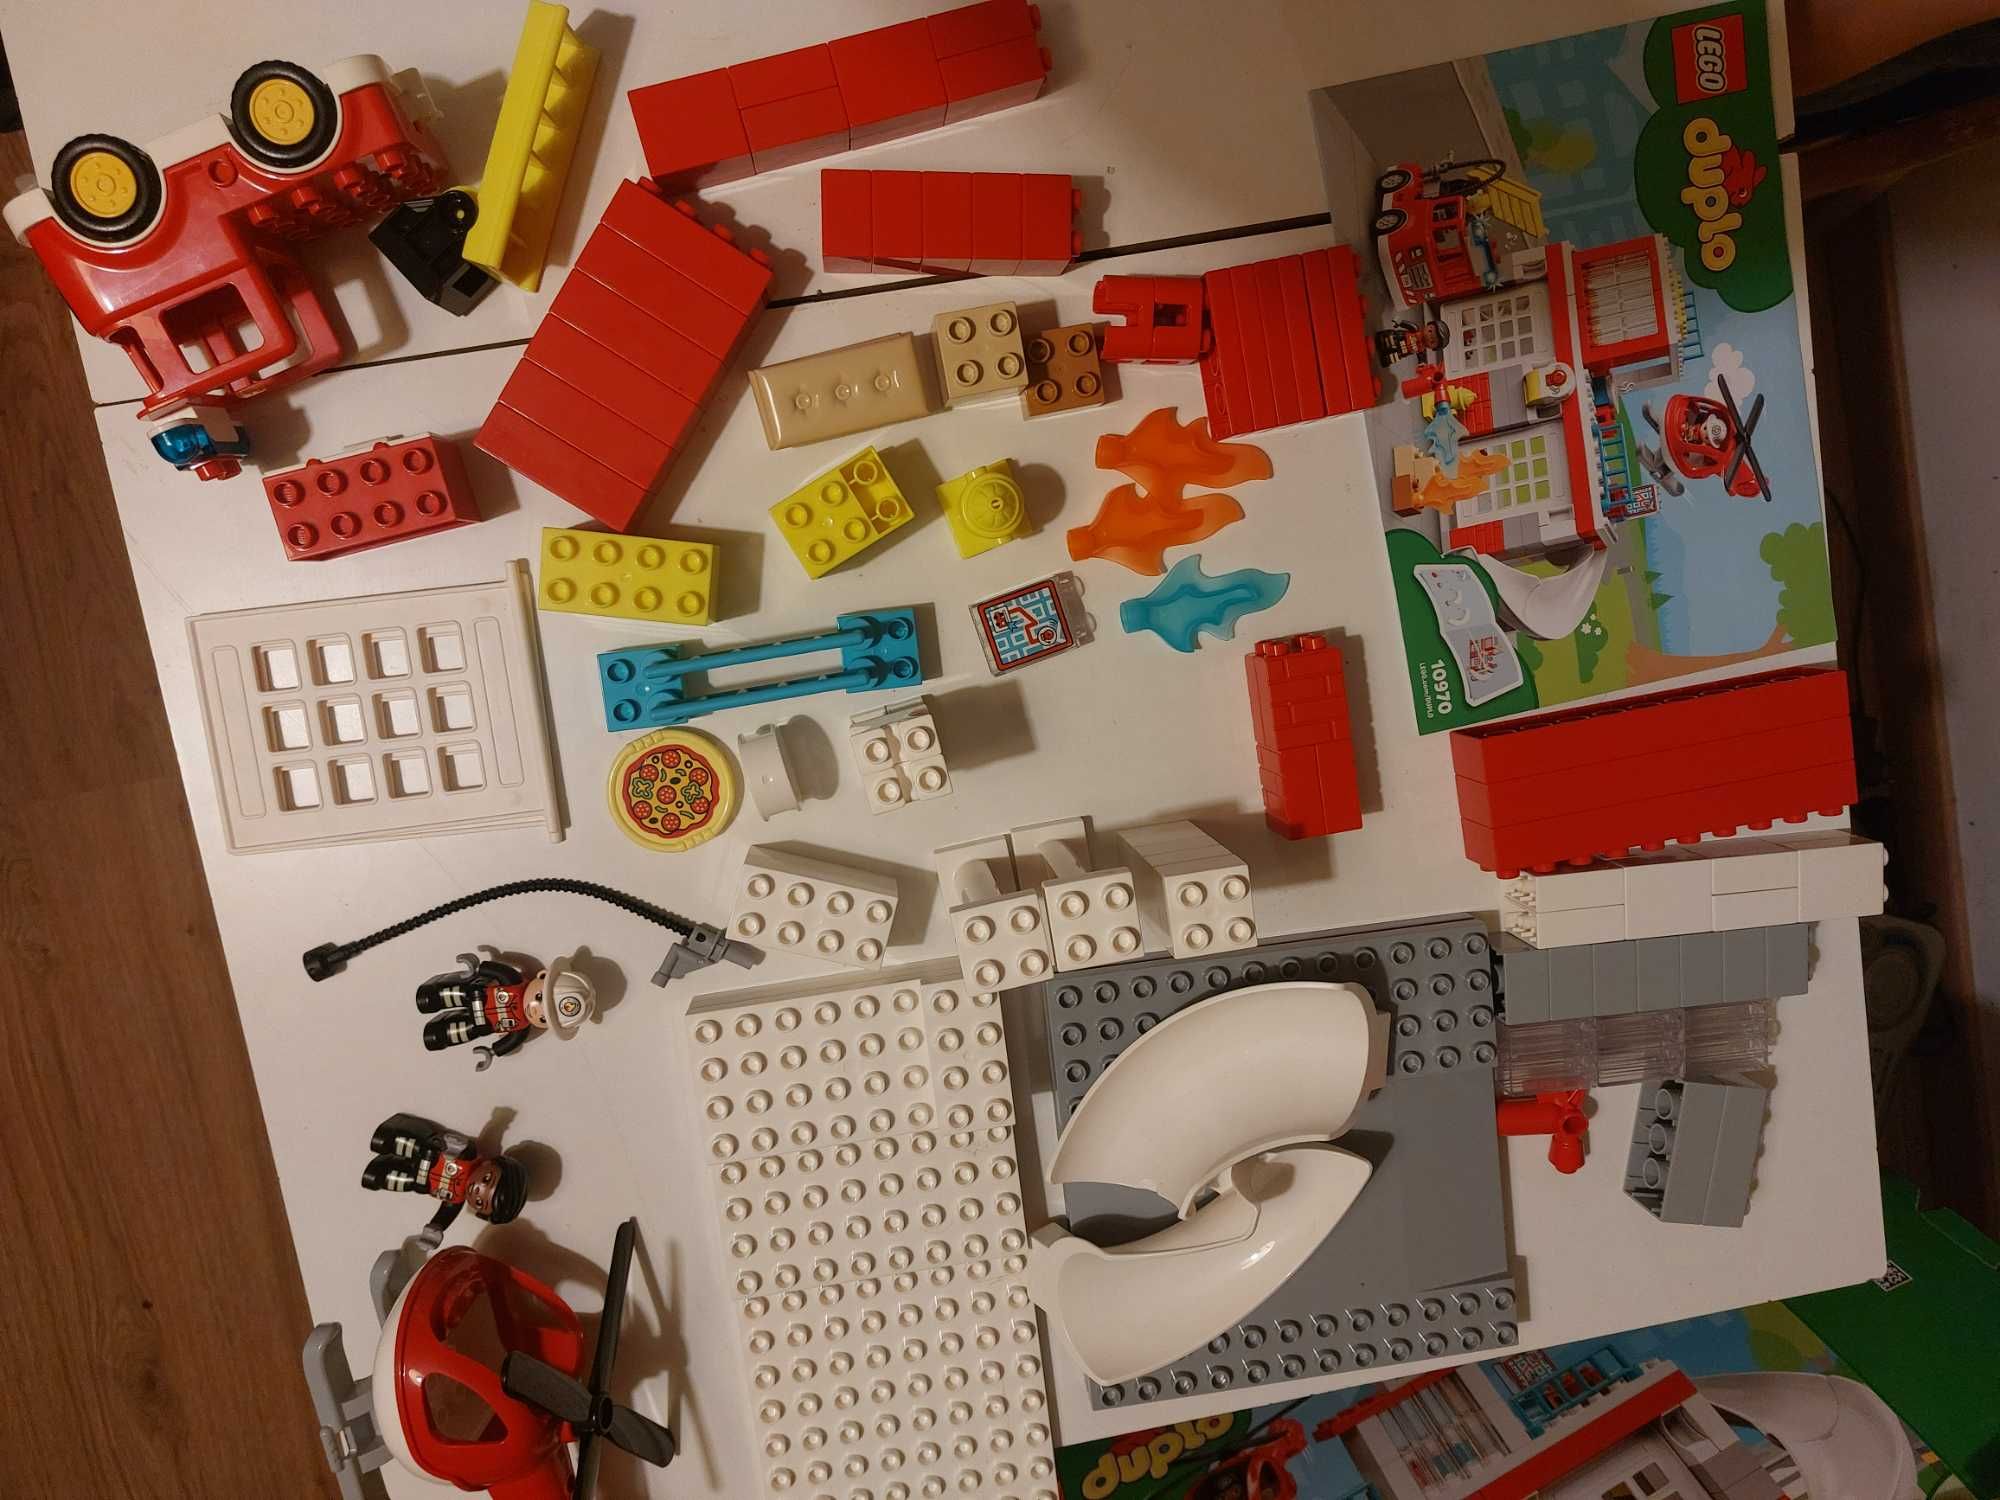 LEGO Duplo 10970 Remiza strażacka i helikopter